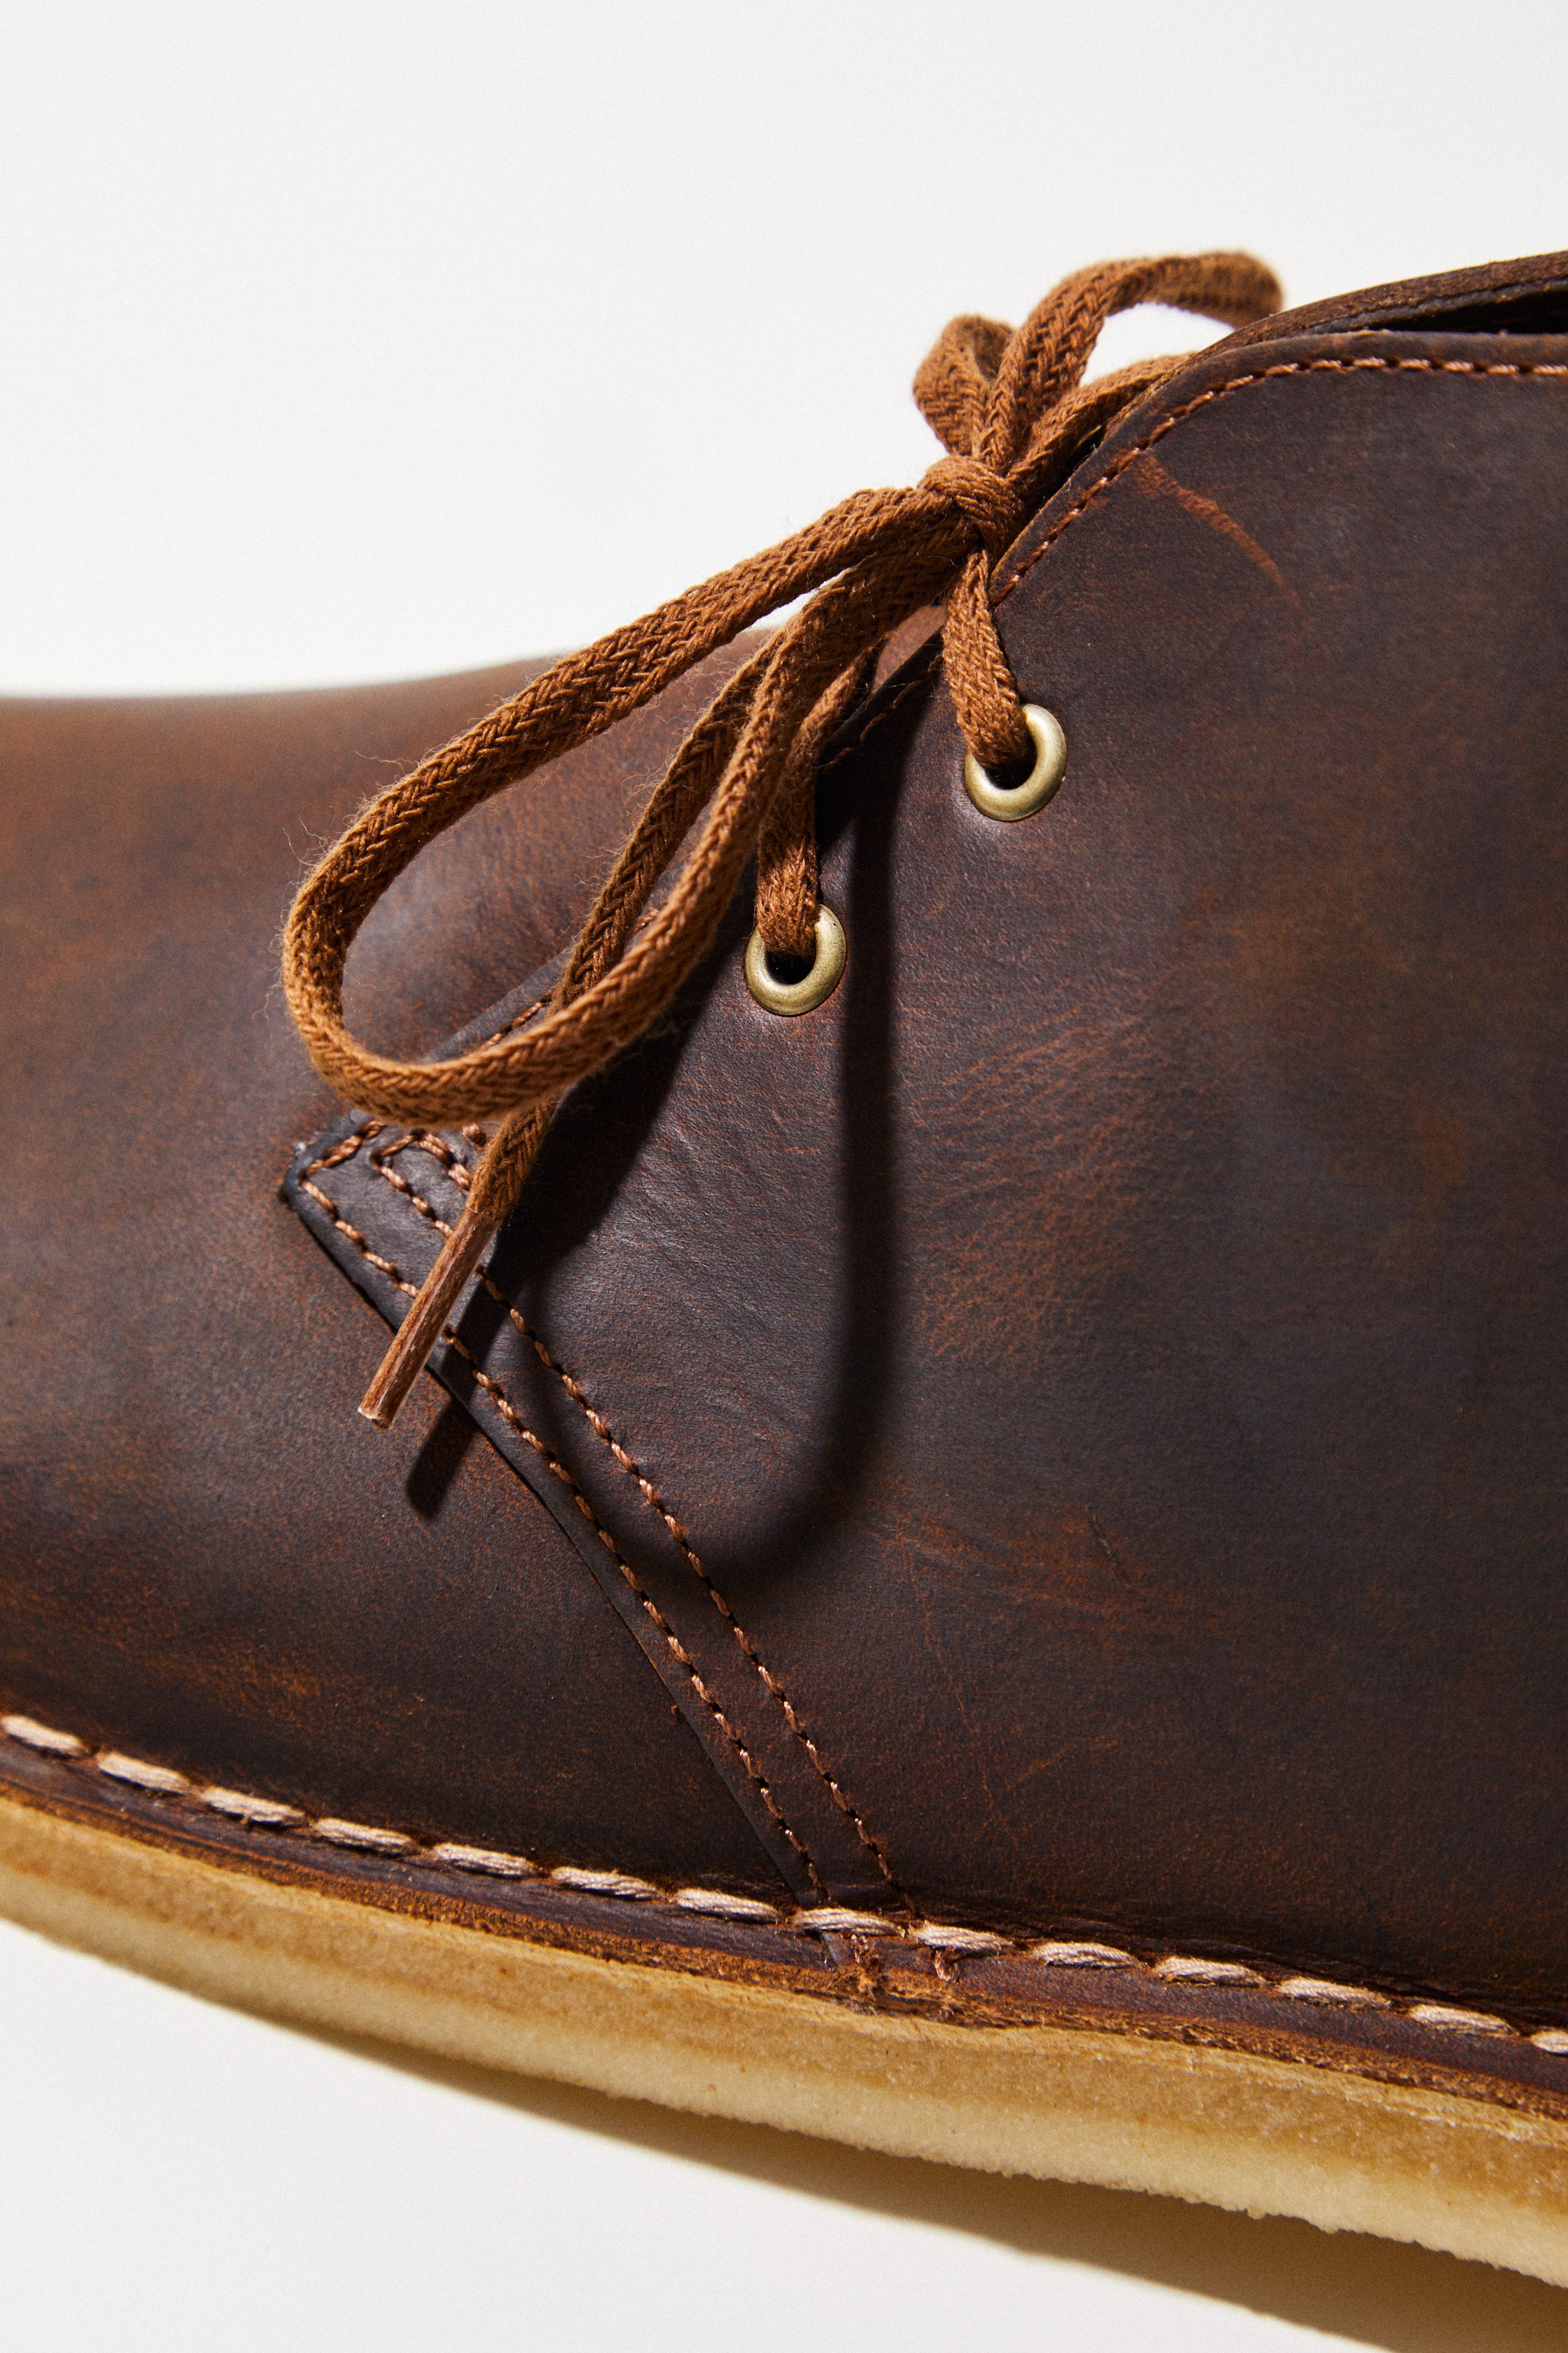 clarks originals desert boots review